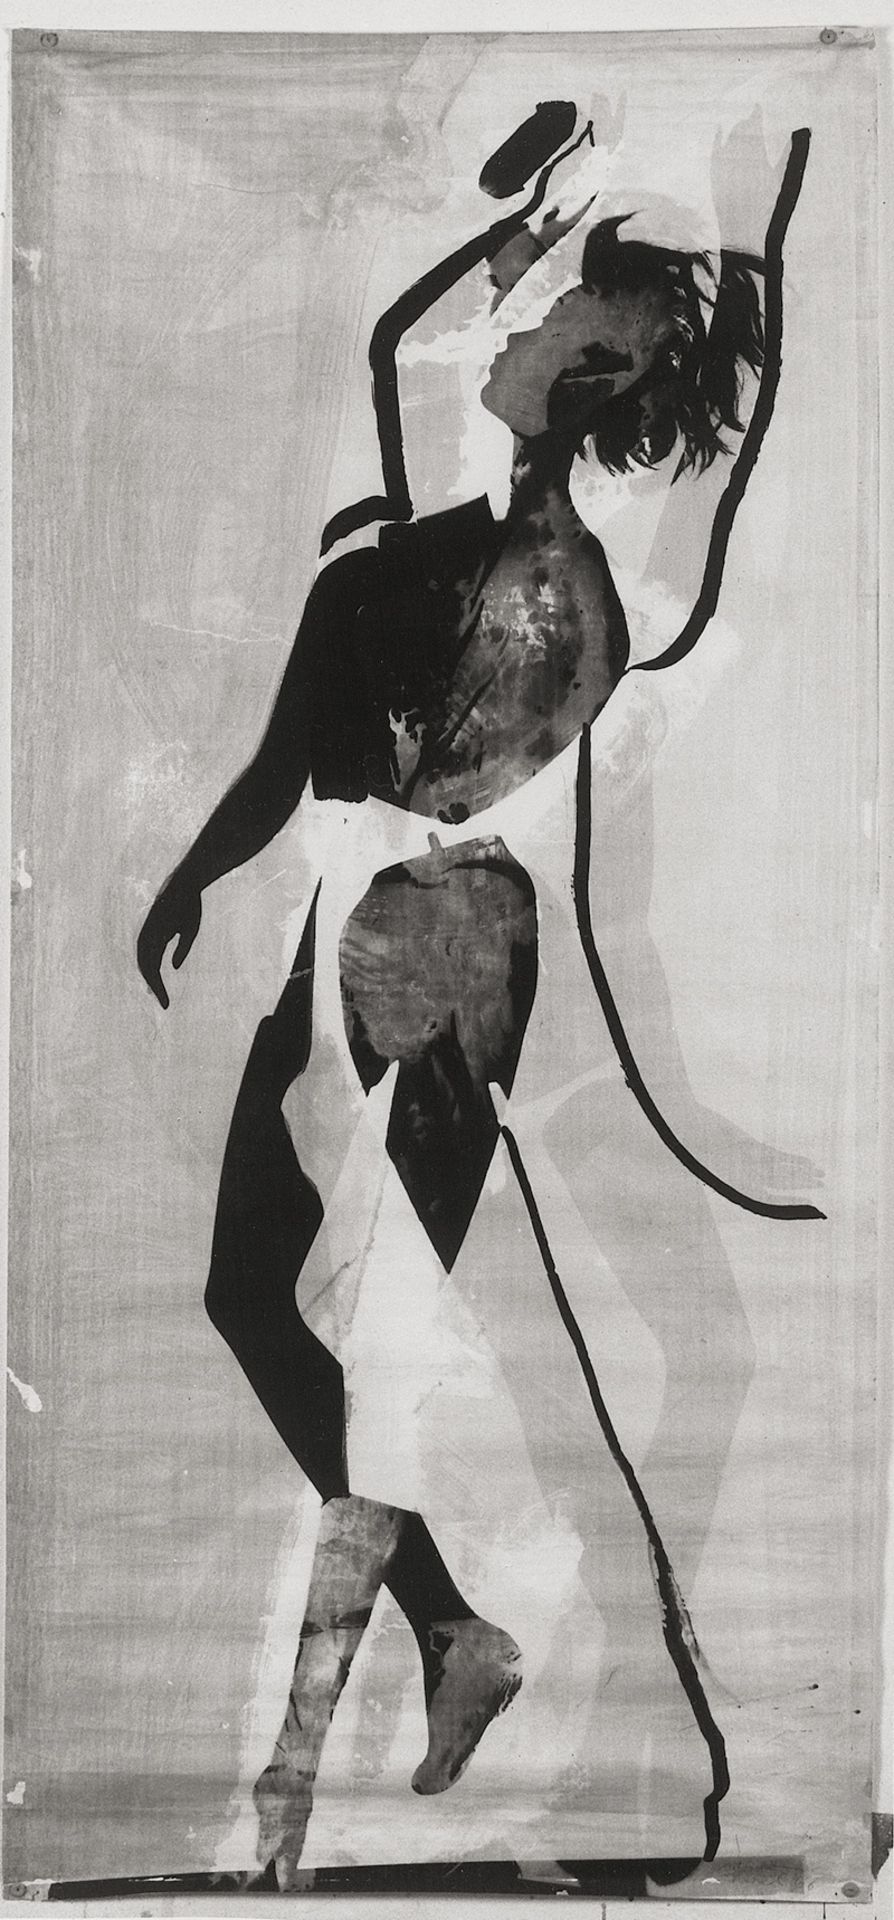 Neusüss, Floris M.: Full body silhouettes - Image 2 of 3